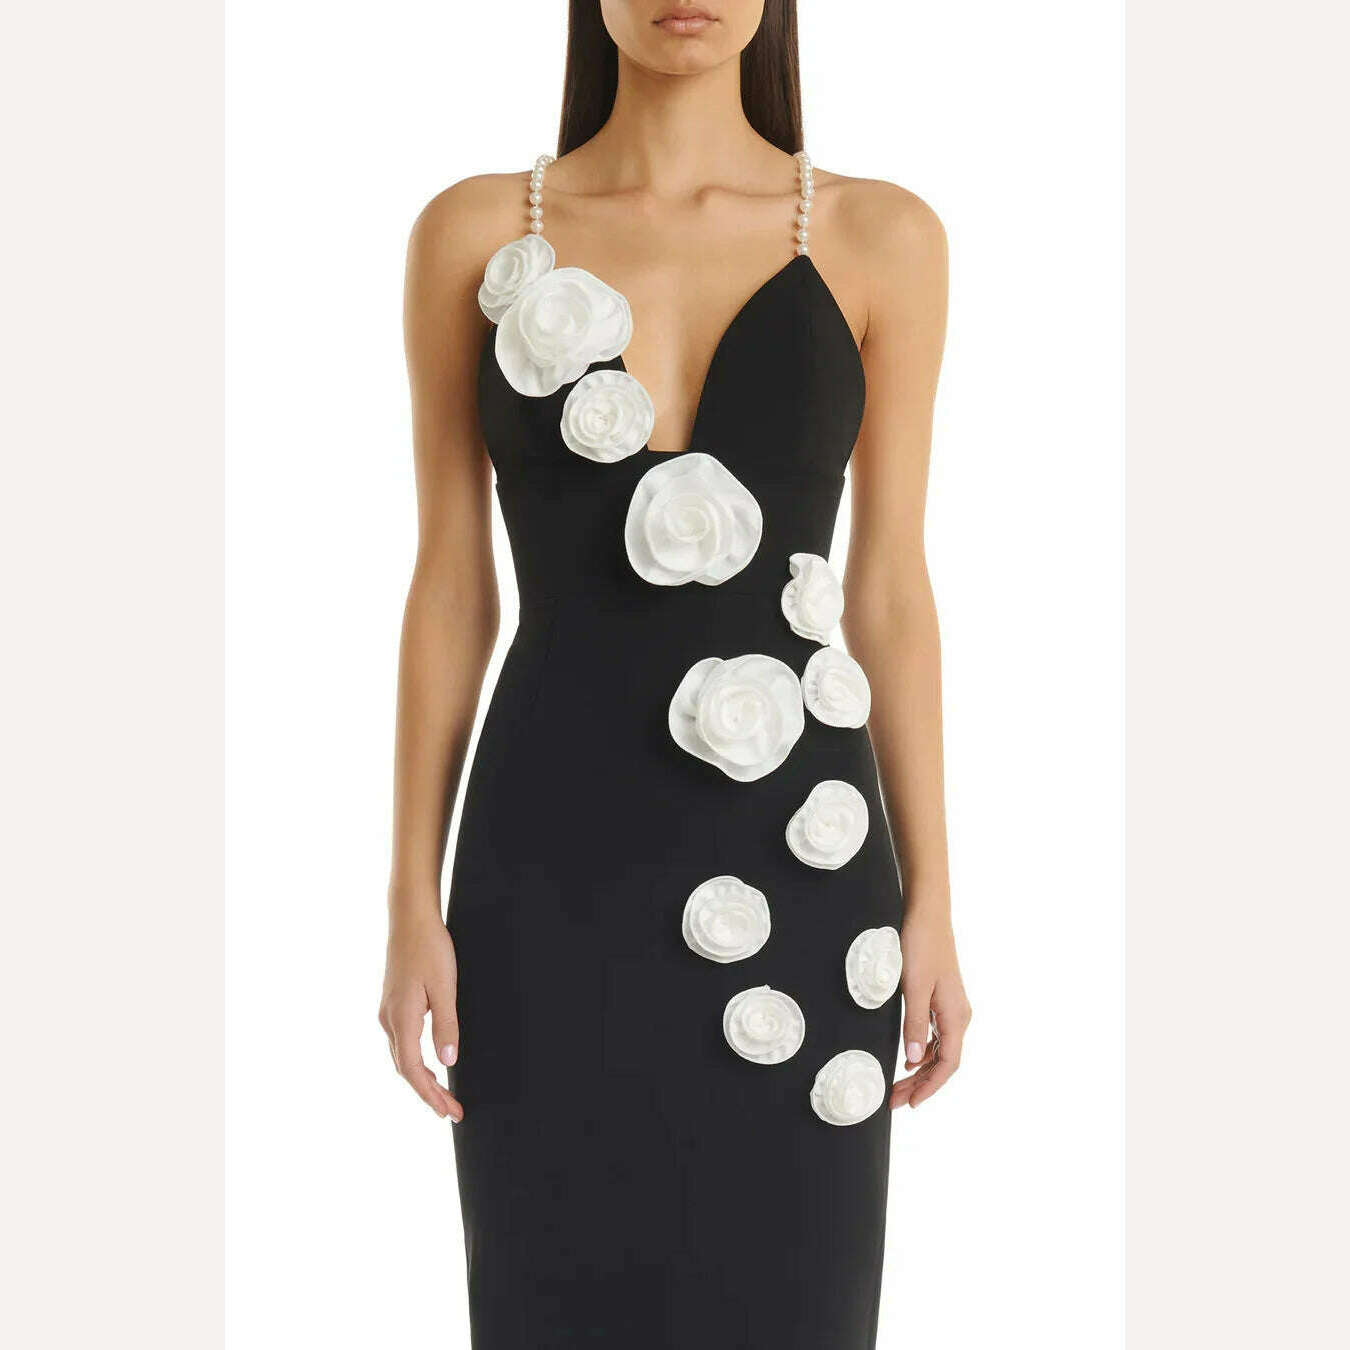 KIMLUD, French court style dress senior sense pearl straps three-dimensional flower design party evening dress women, Black / M, KIMLUD Womens Clothes